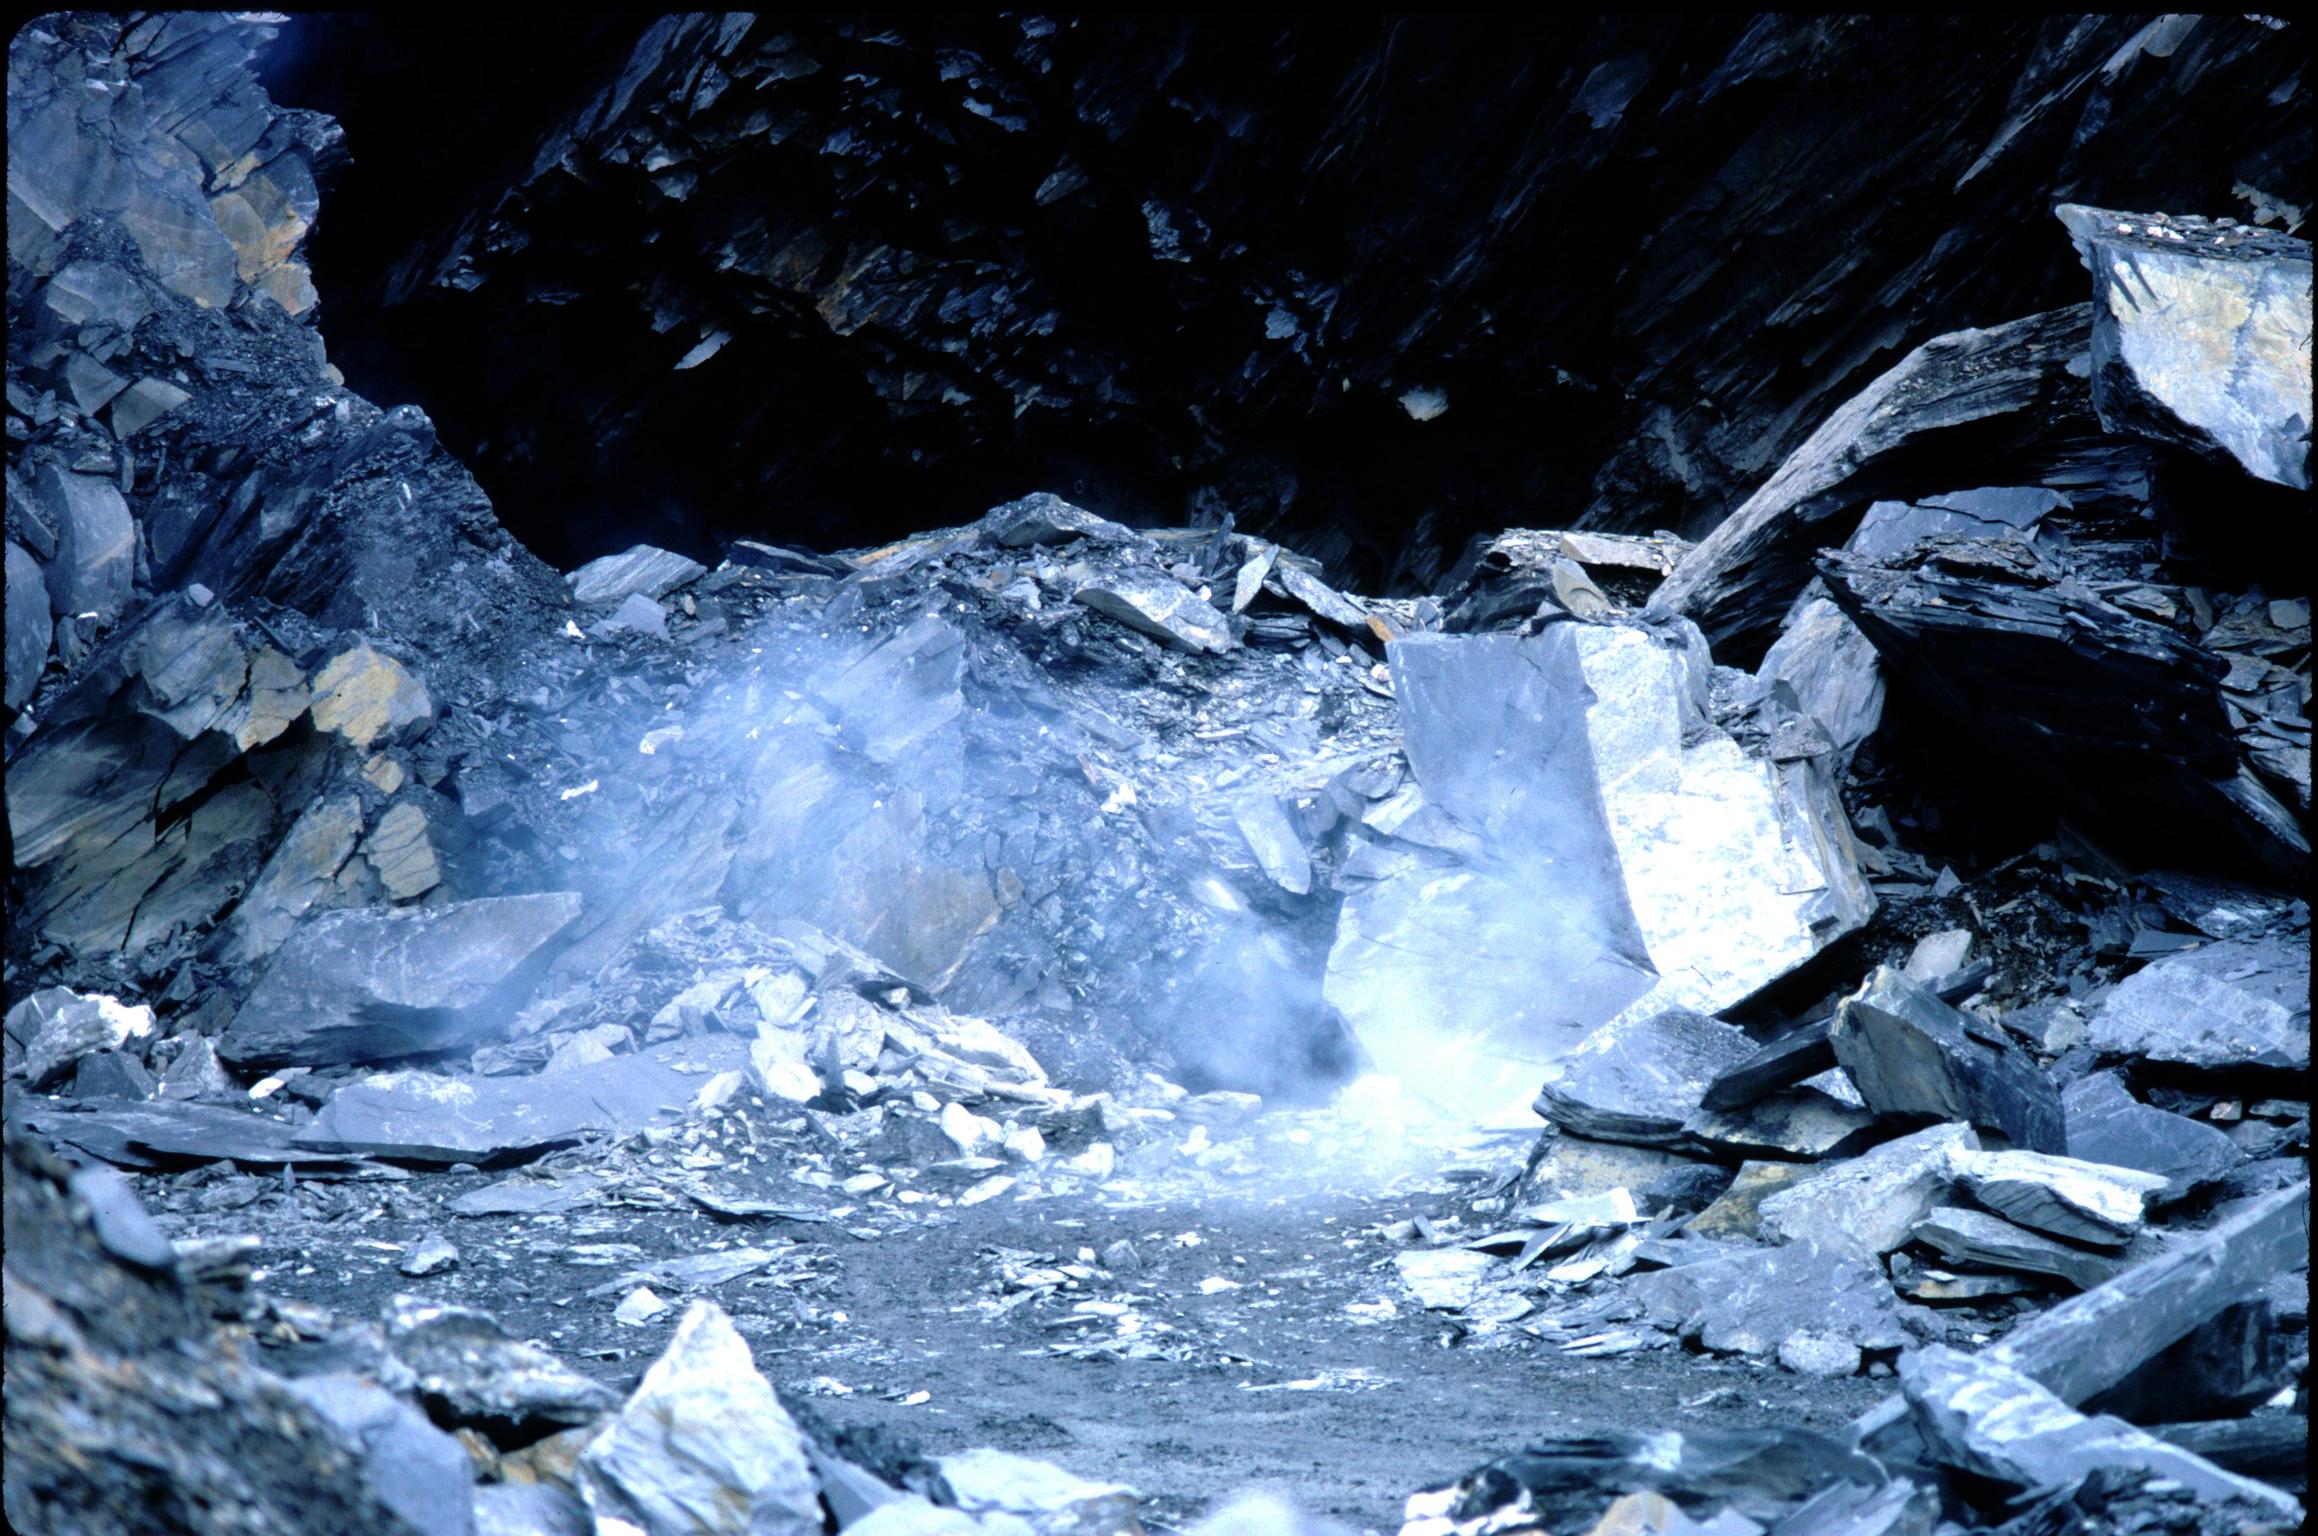 Oakeley slate quarry, photograph